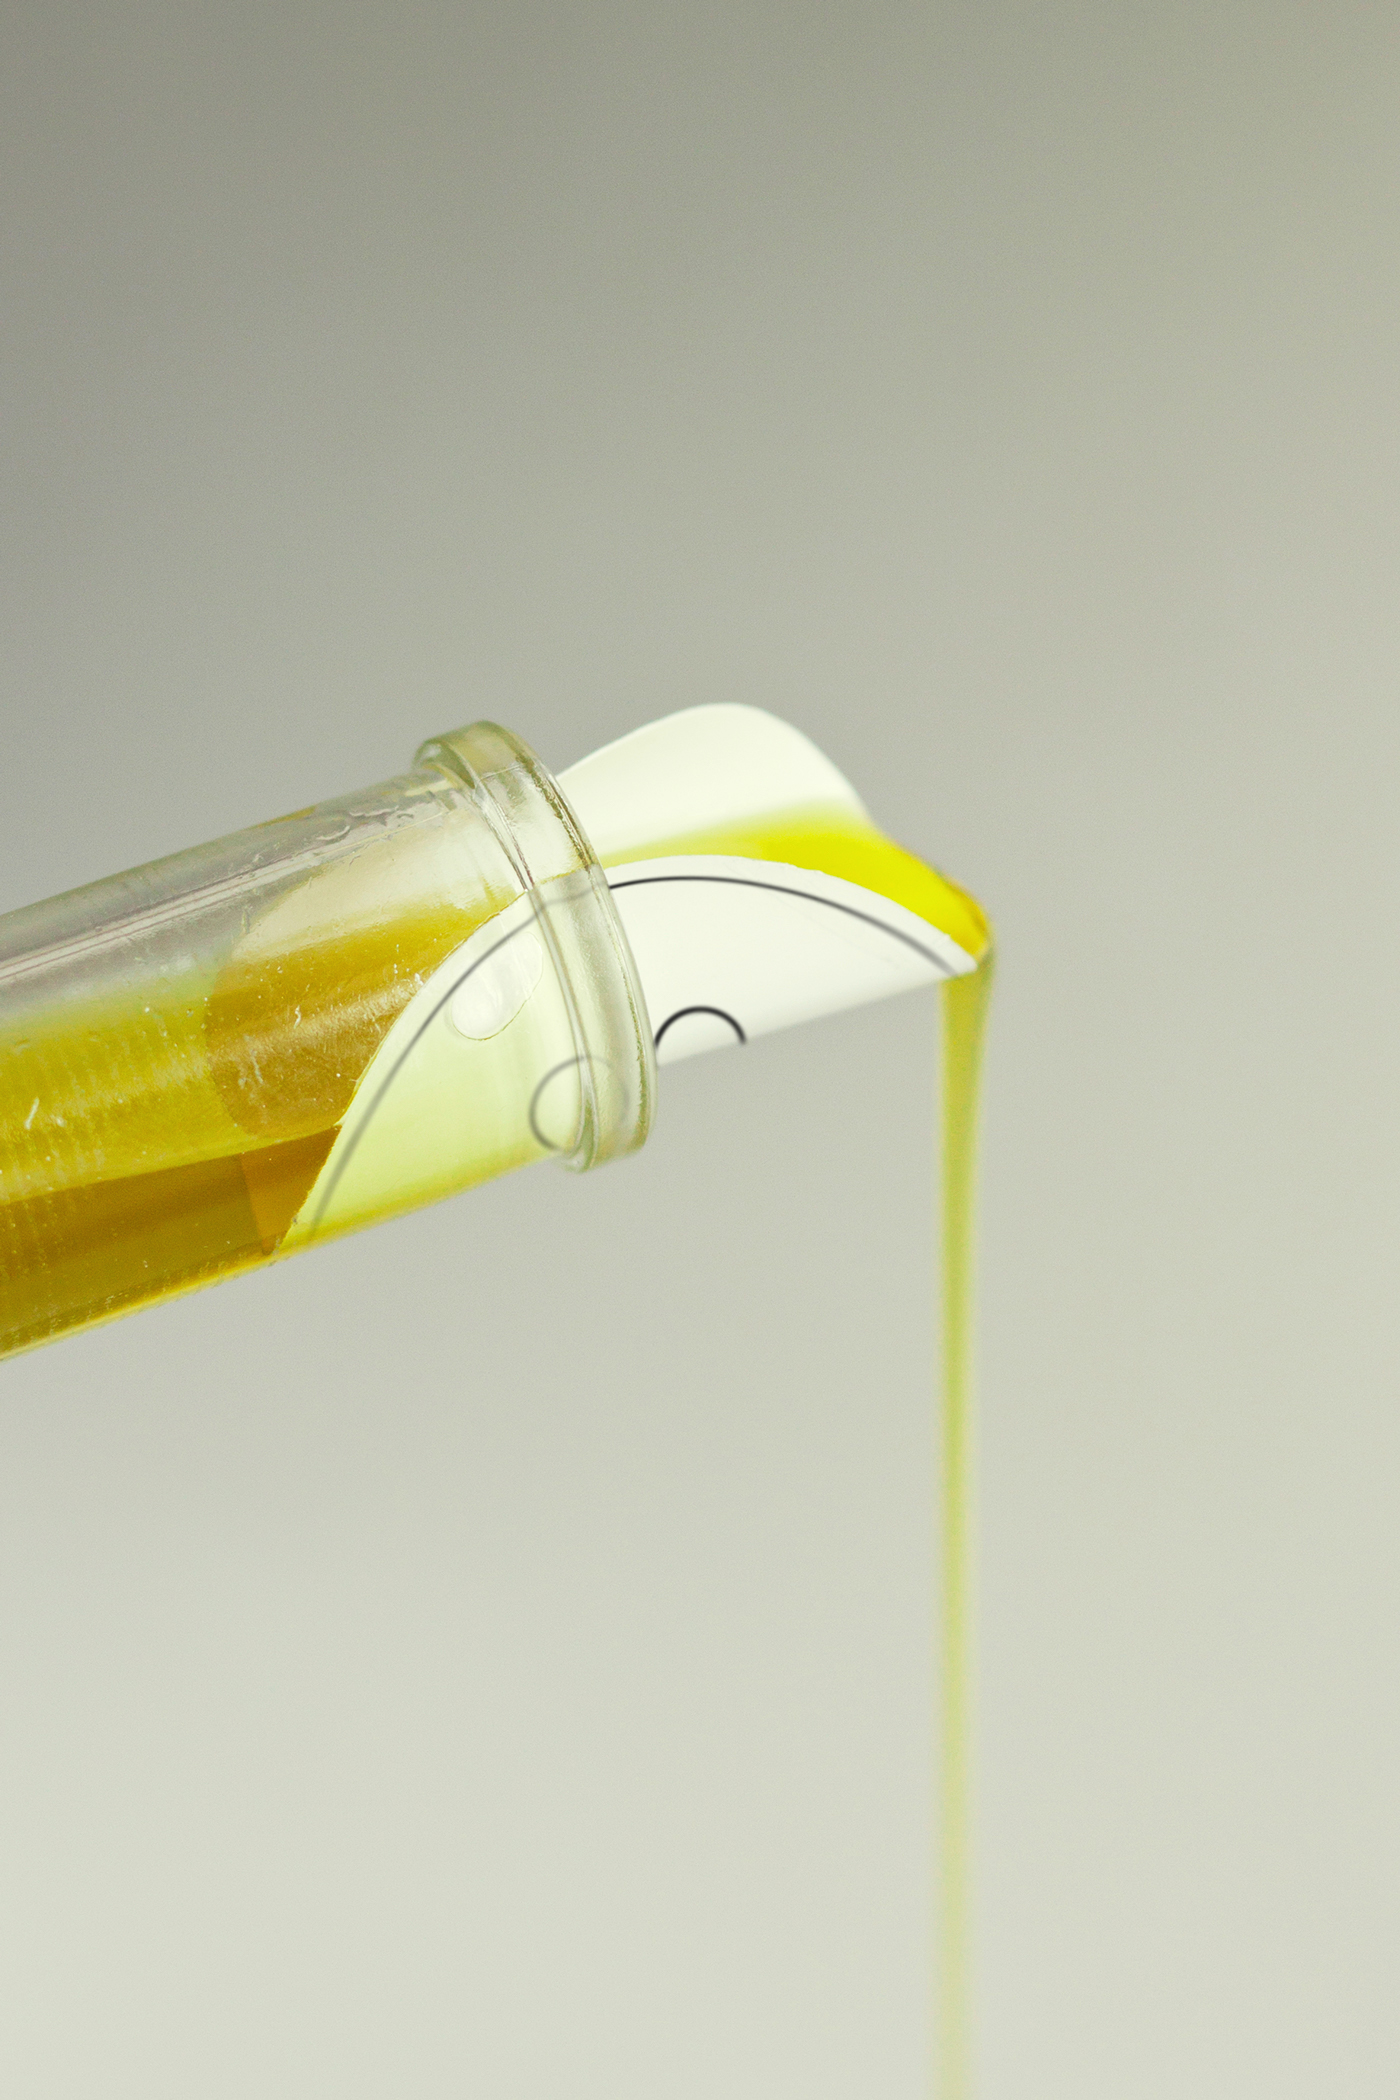 foodpackaging   Olive Oil bottle olio interactive packaging label design Label drop stop